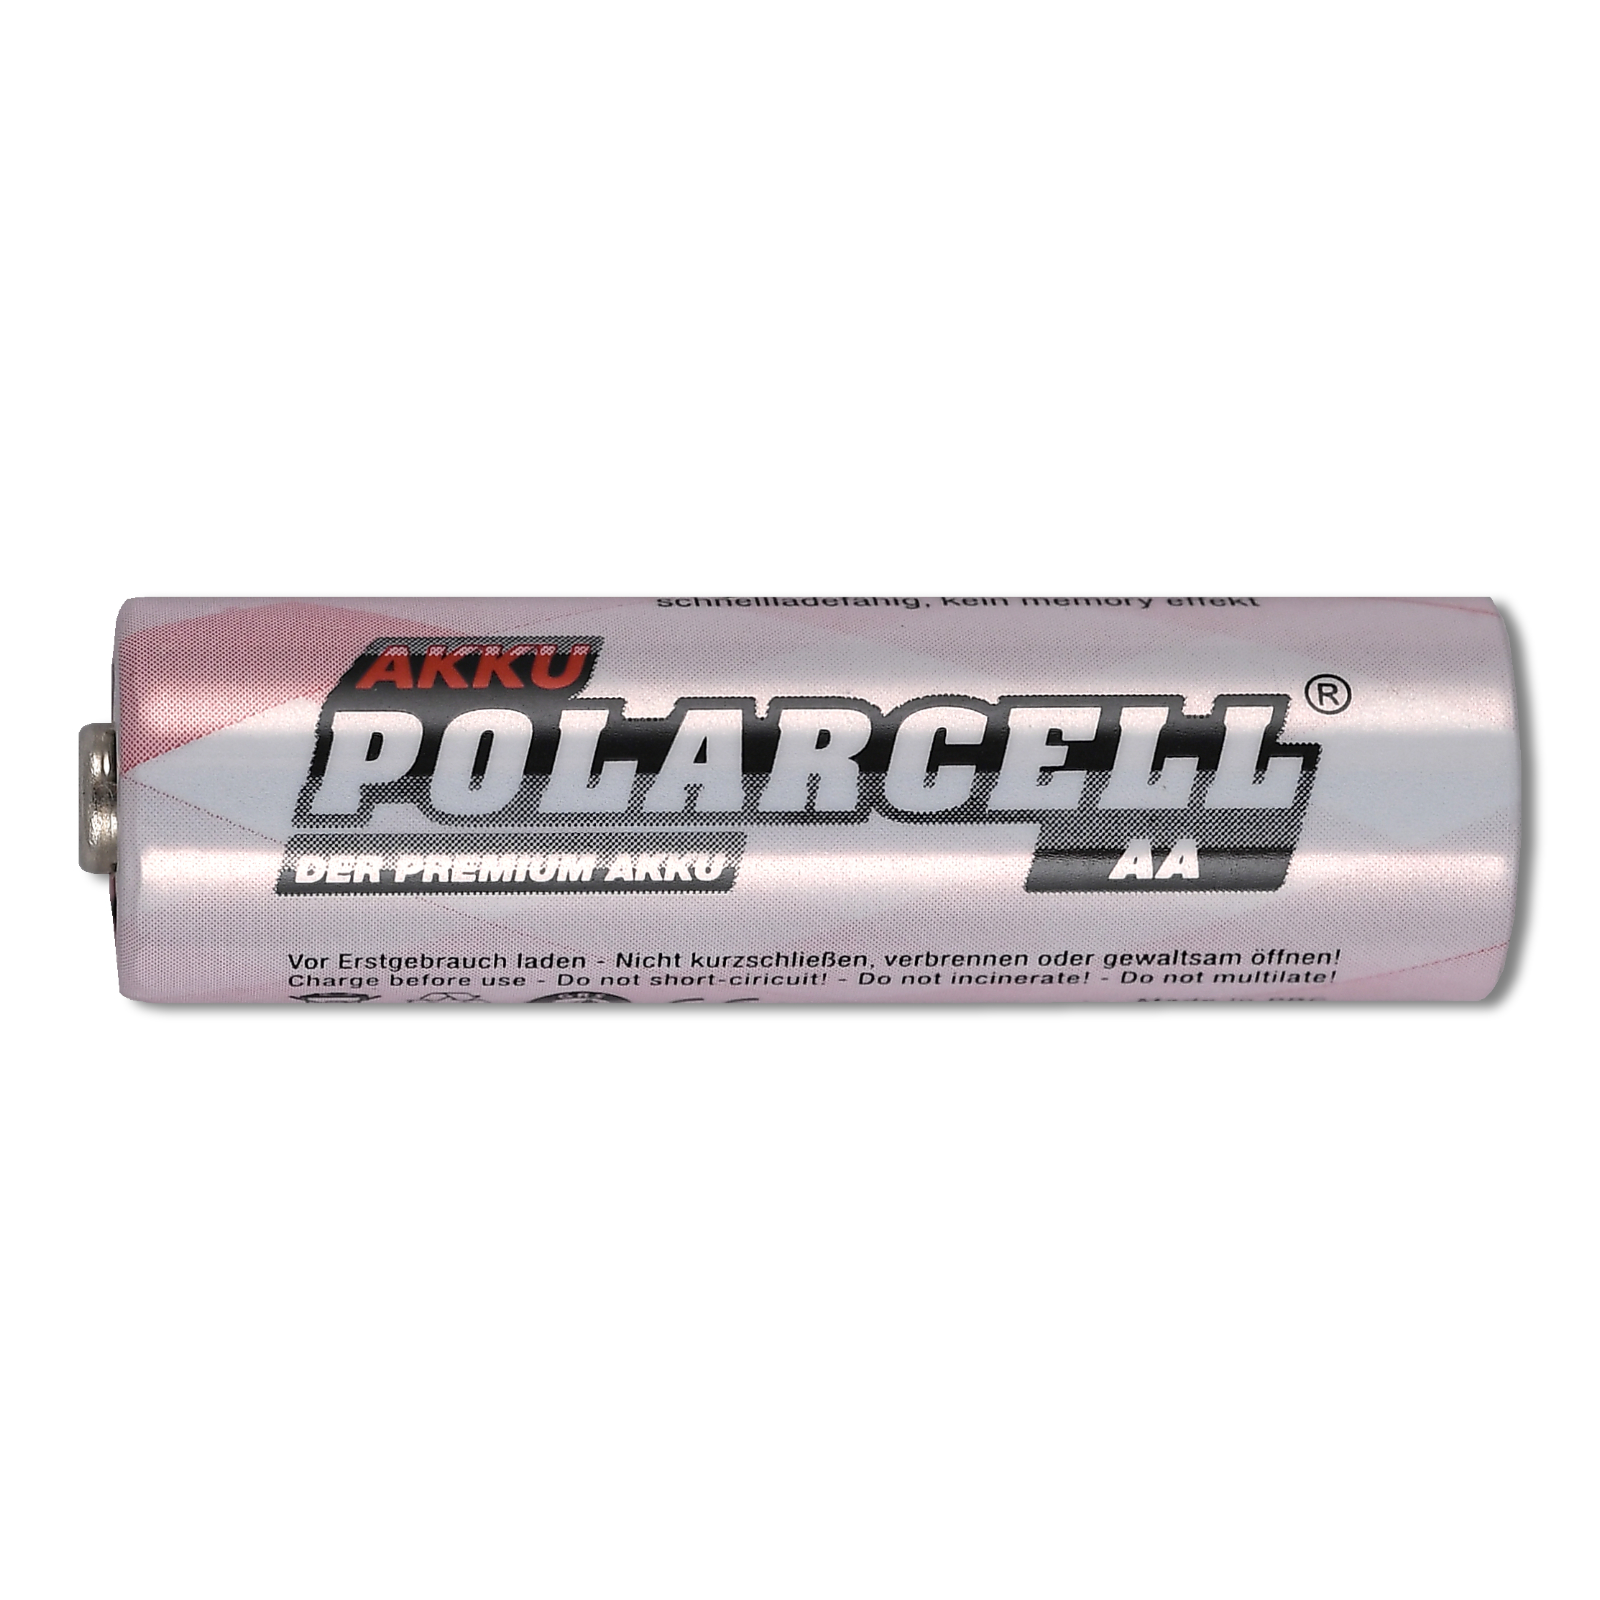 Baterie PolarCell AA 2850 mAh